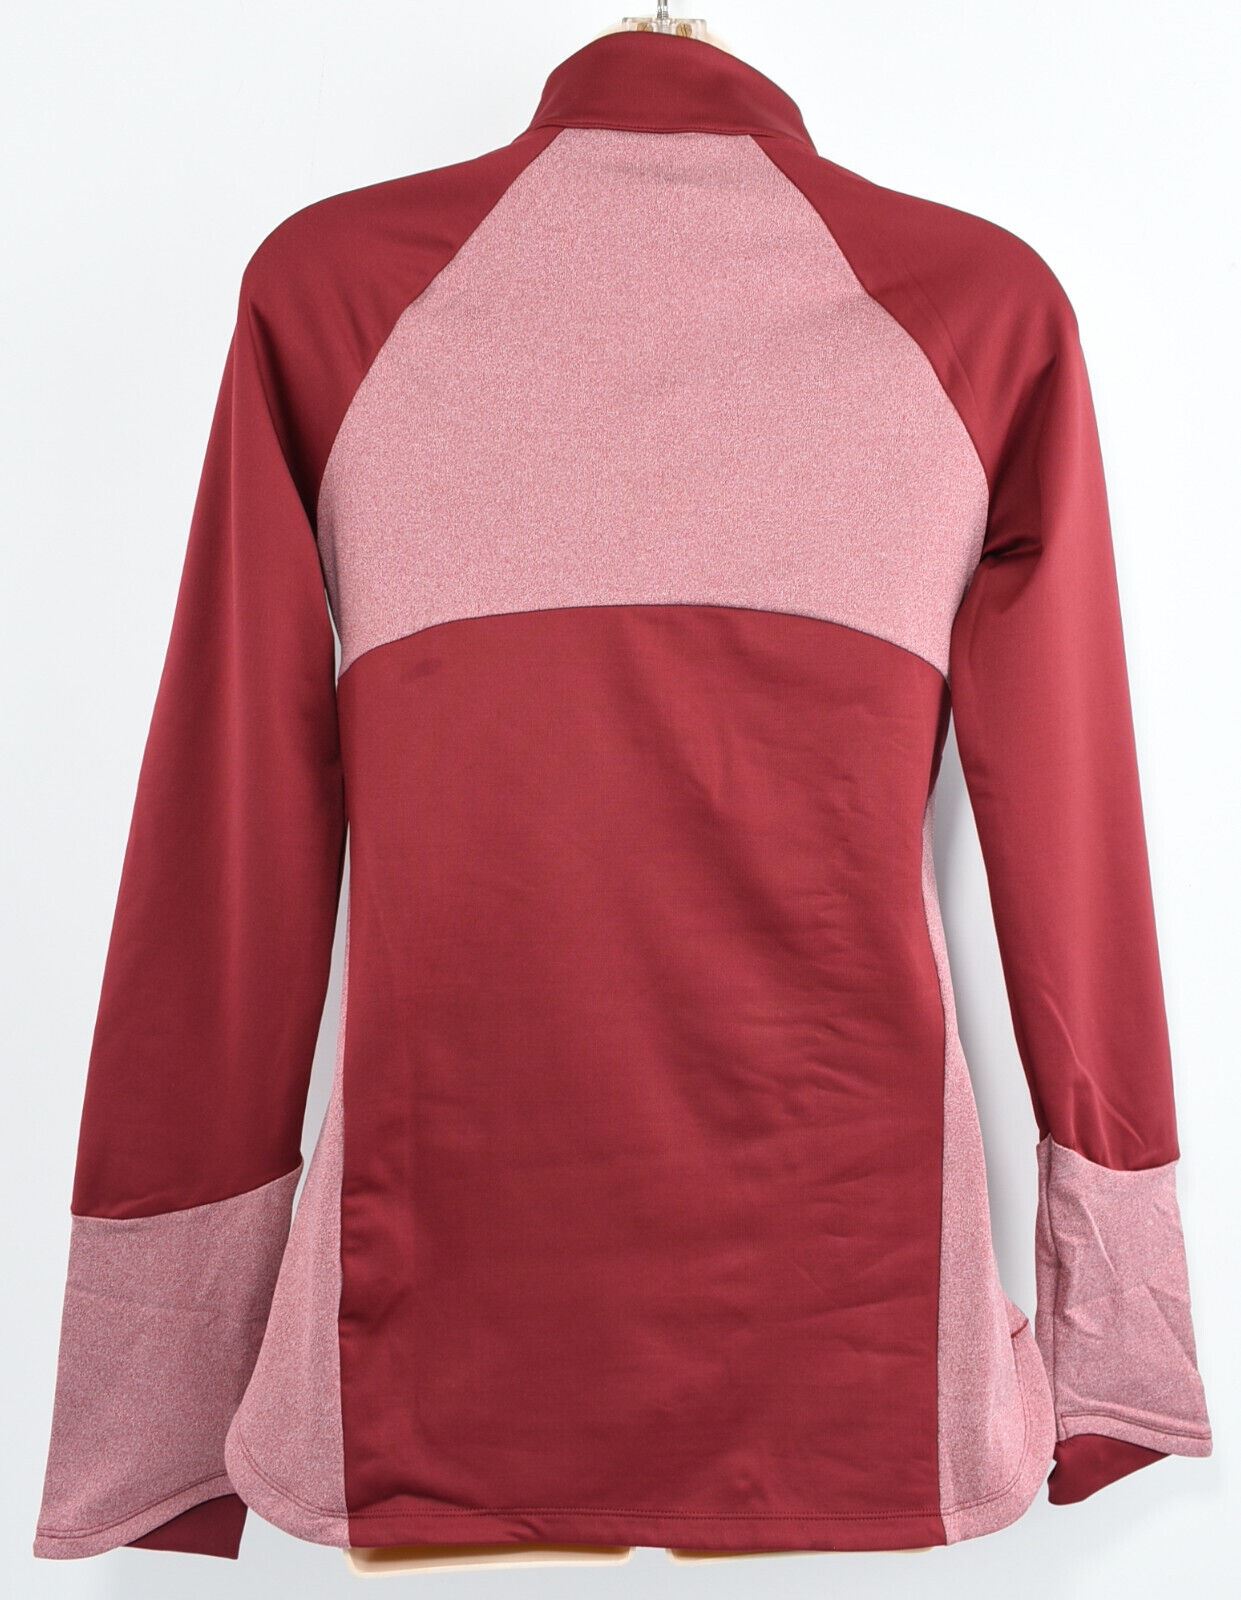 UNDER ARMOUR UA COZY Women's 1/2 Zip Long Sleeve Top, League Red, size S /UK 10